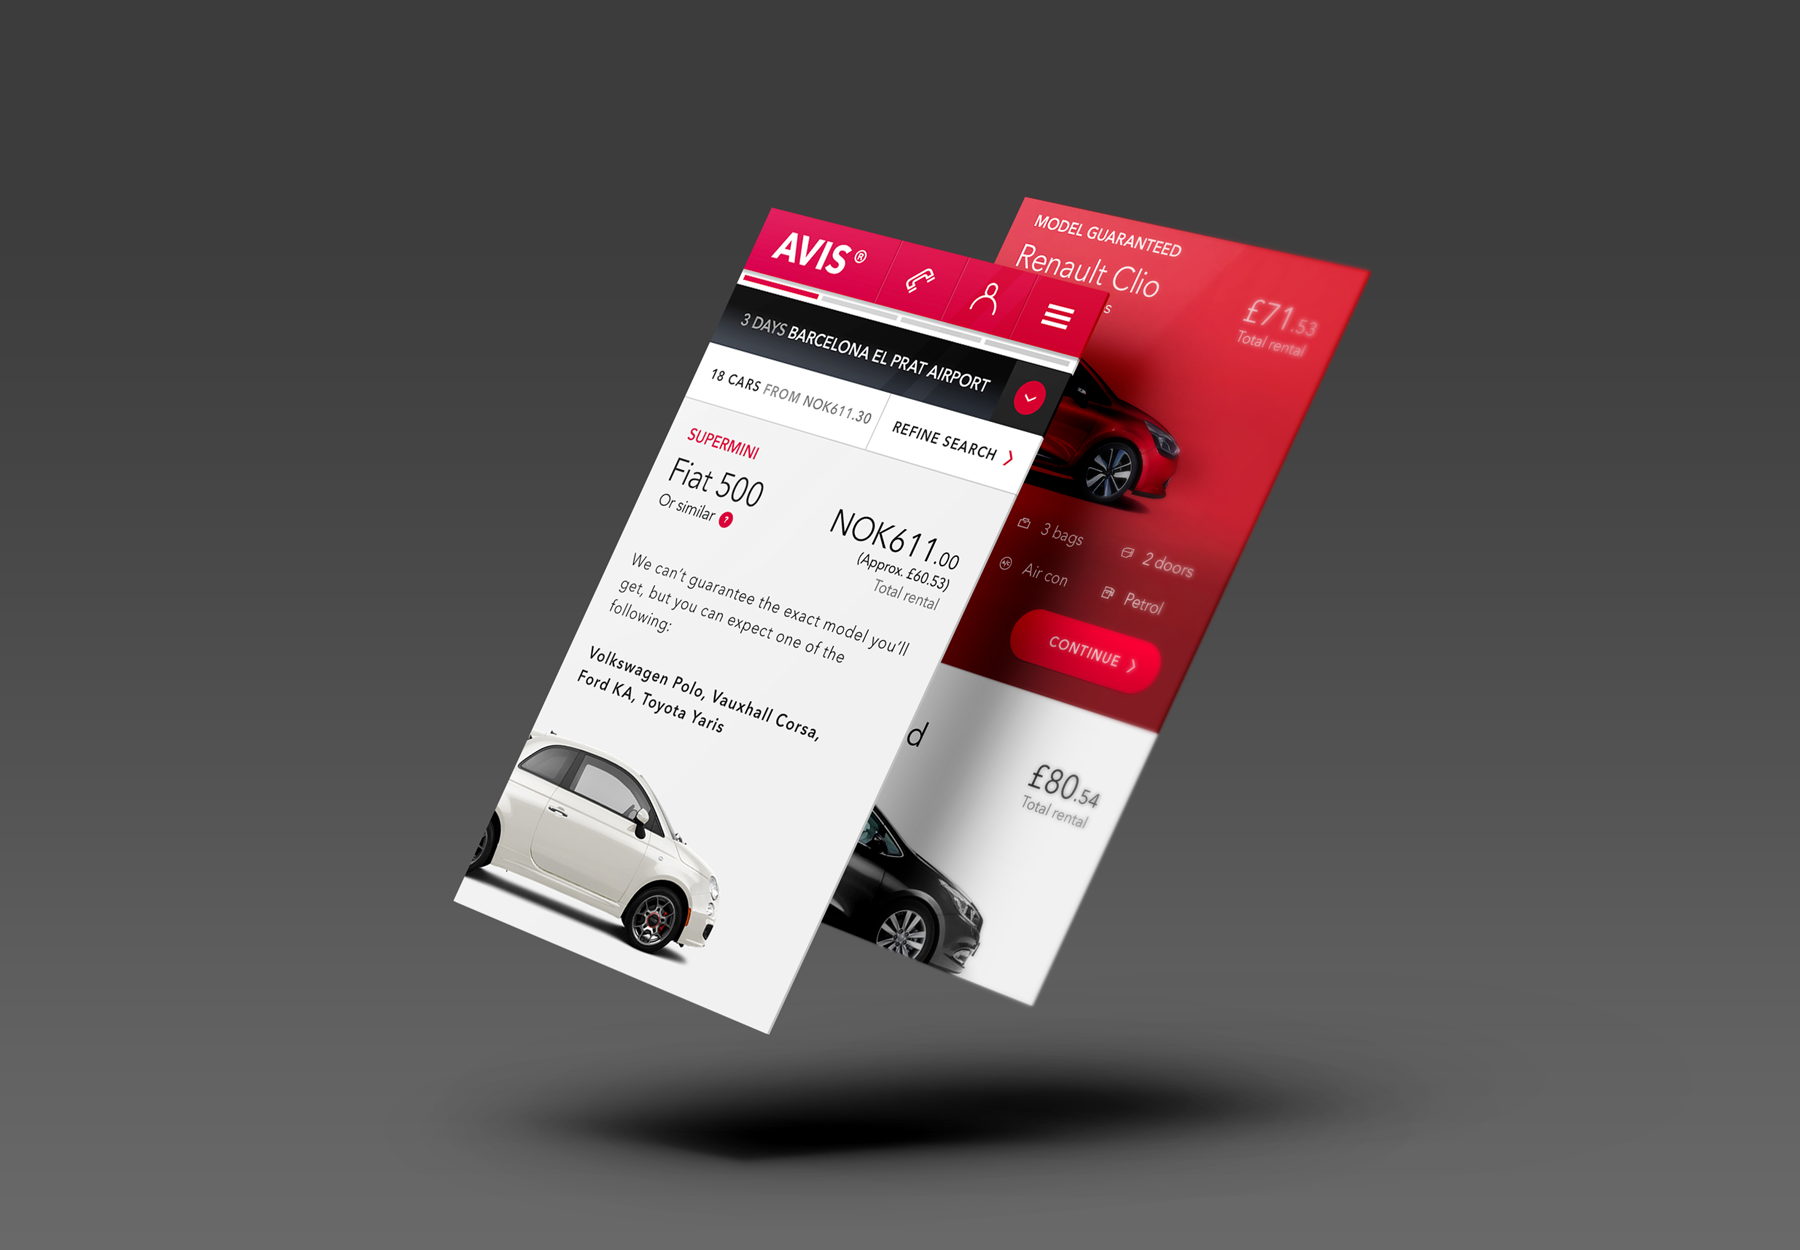 AVIS car hire transactional smartphone app